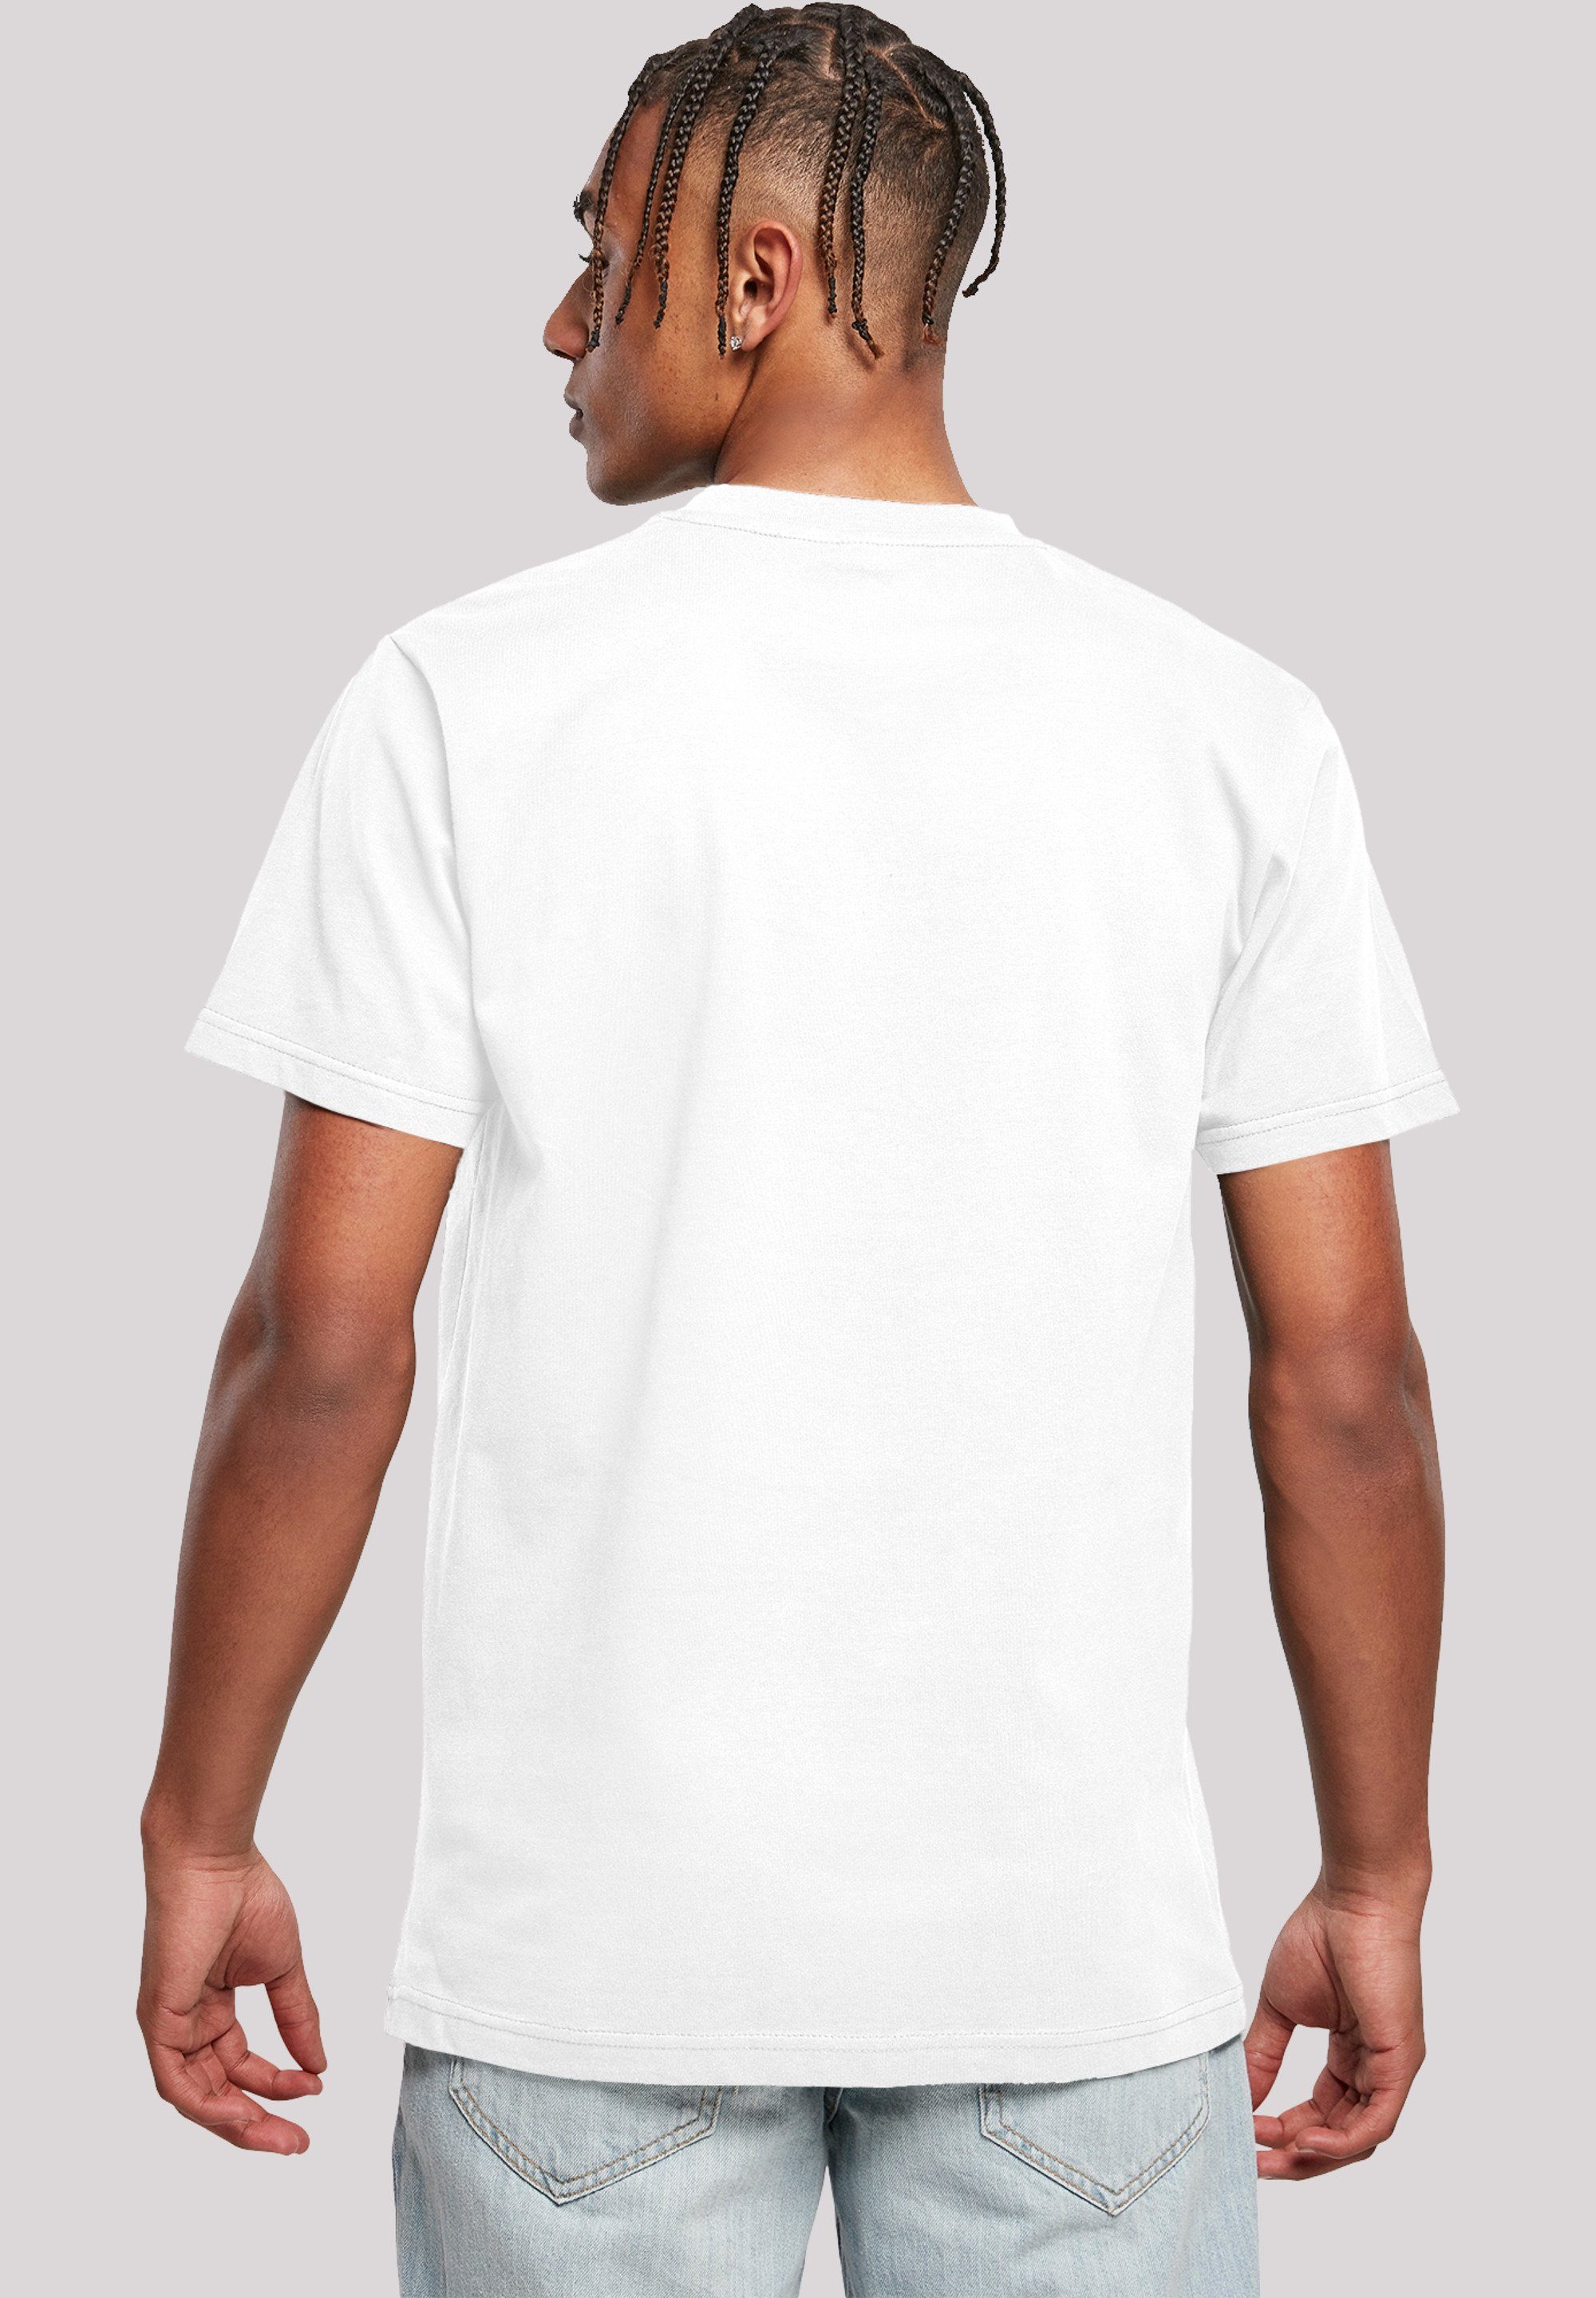 F4NT4STIC T-Shirt Friends Perk Central Herren,Premium Merch,Regular-Fit,Basic,Bedruckt Sketch weiß